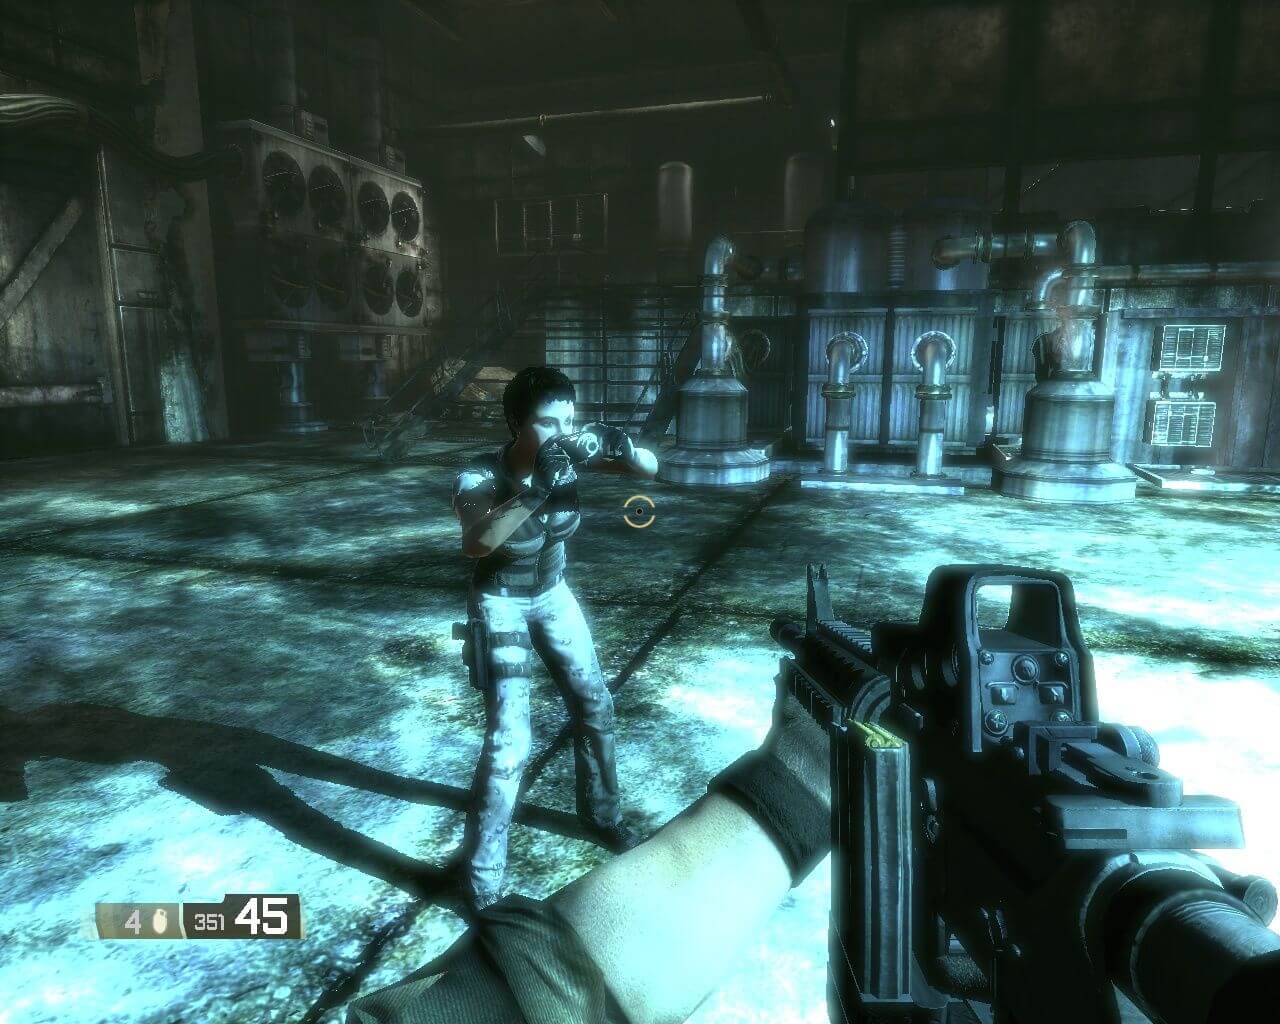 BlackSite: Area 51 - PS3 Games